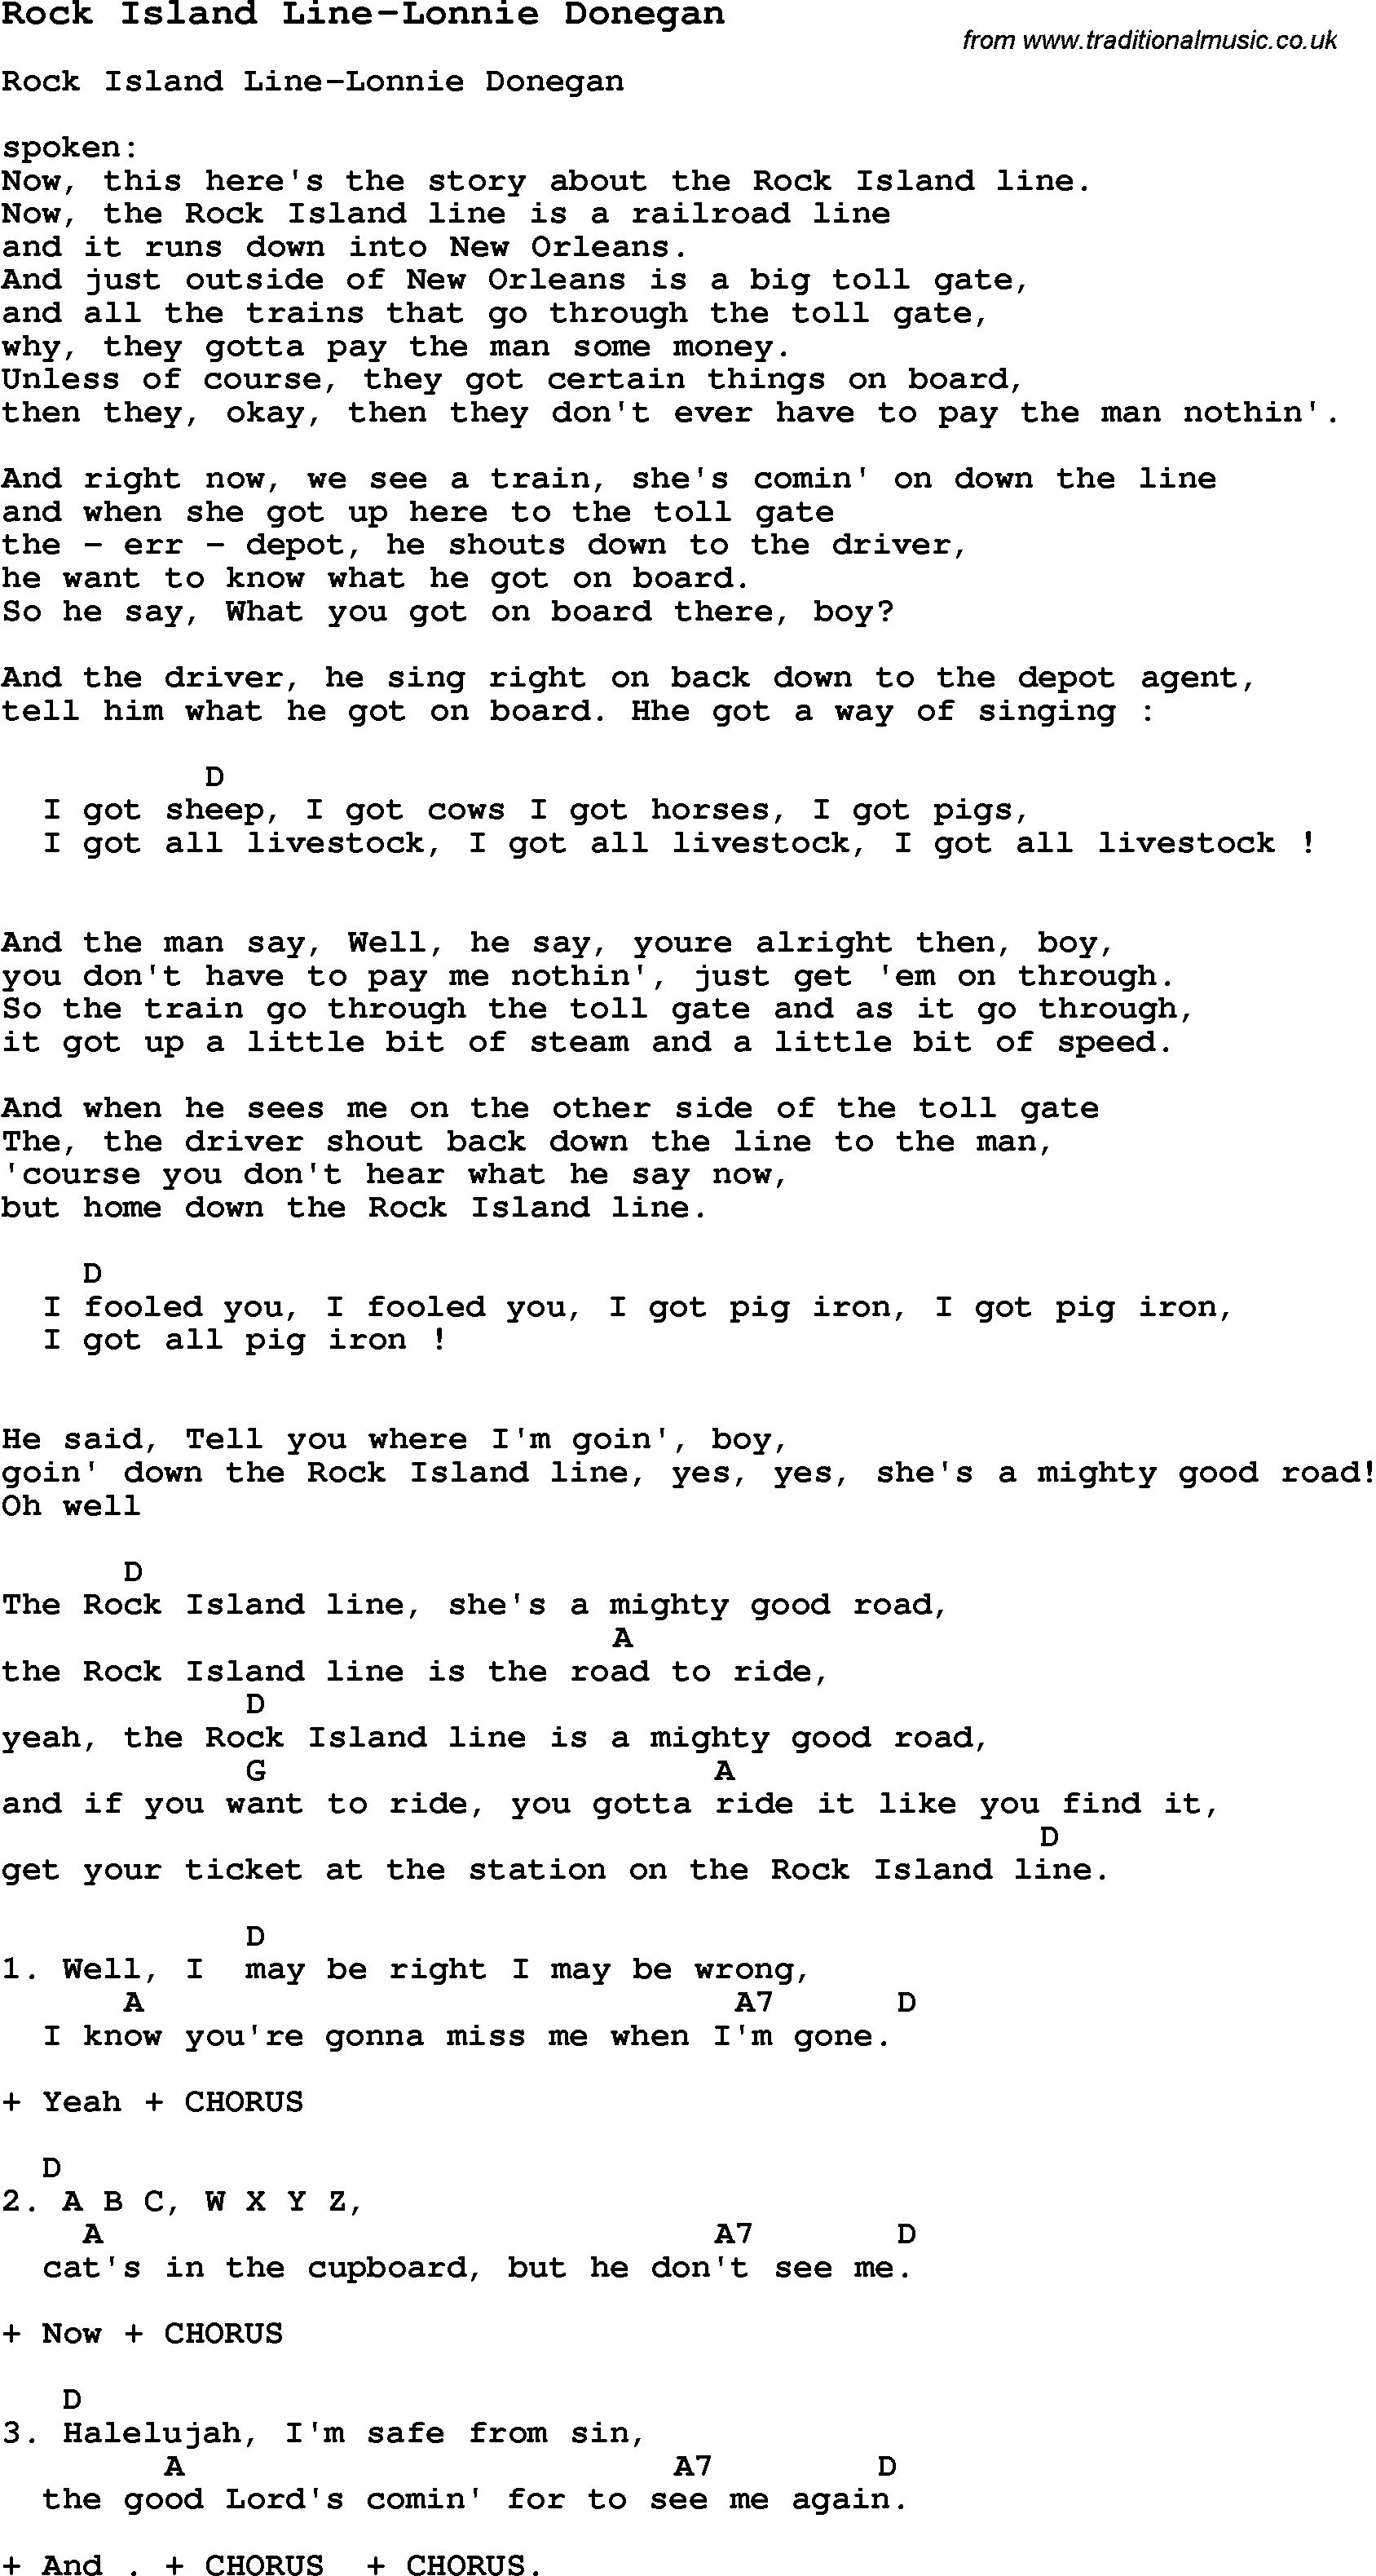 Skiffle Song Lyrics for Rock Island Line-Lonnie Donegan.